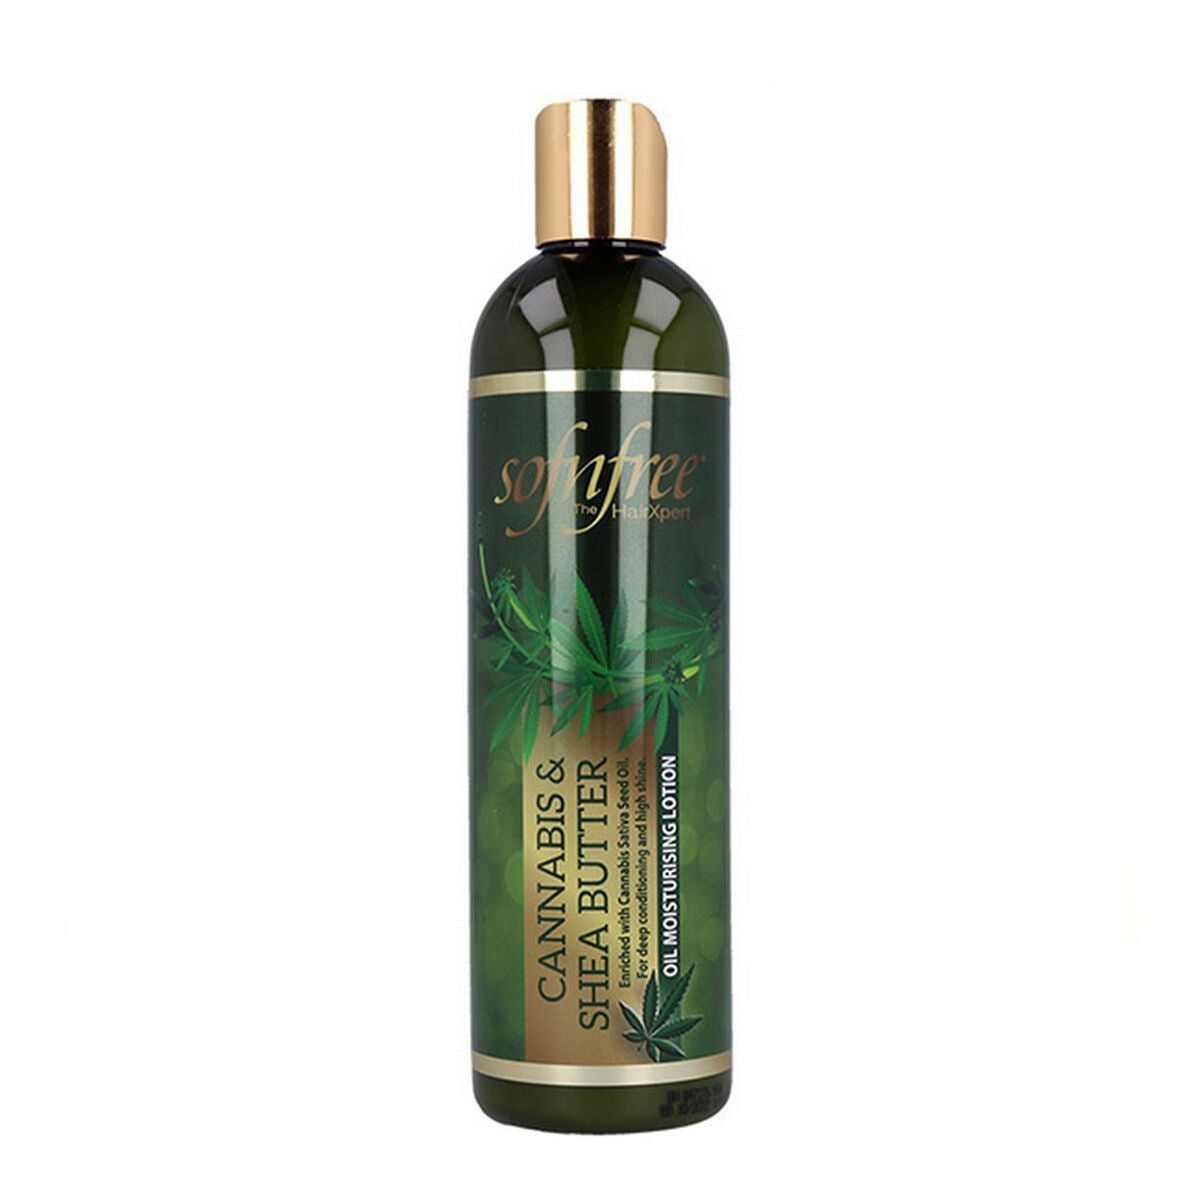 Loção de cabelo Sofn'free Cannabis & Shear Butter Oil 350 ml